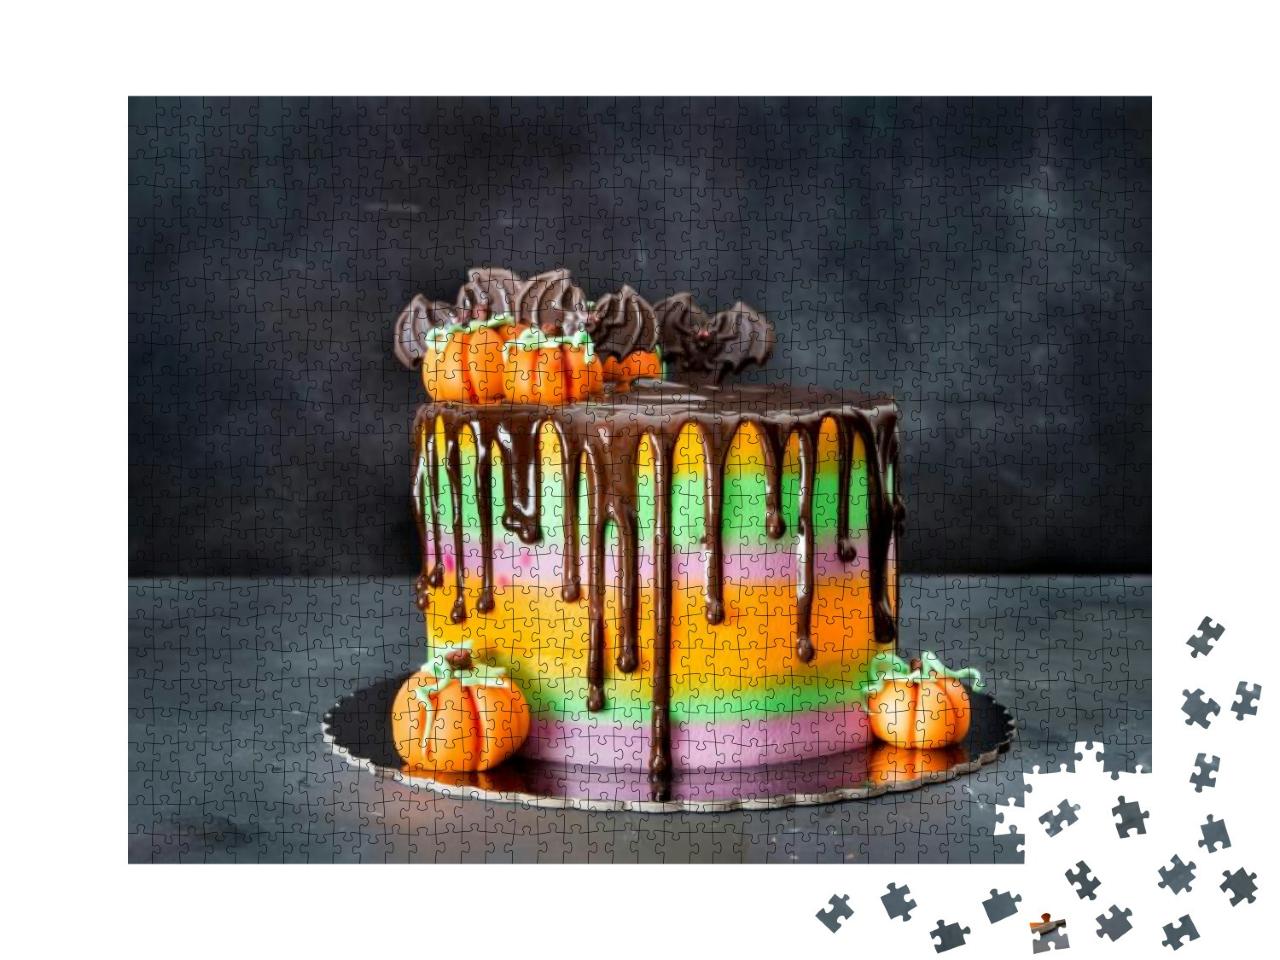 Puzzle 1000 Teile „Kreative Halloween-Torte“